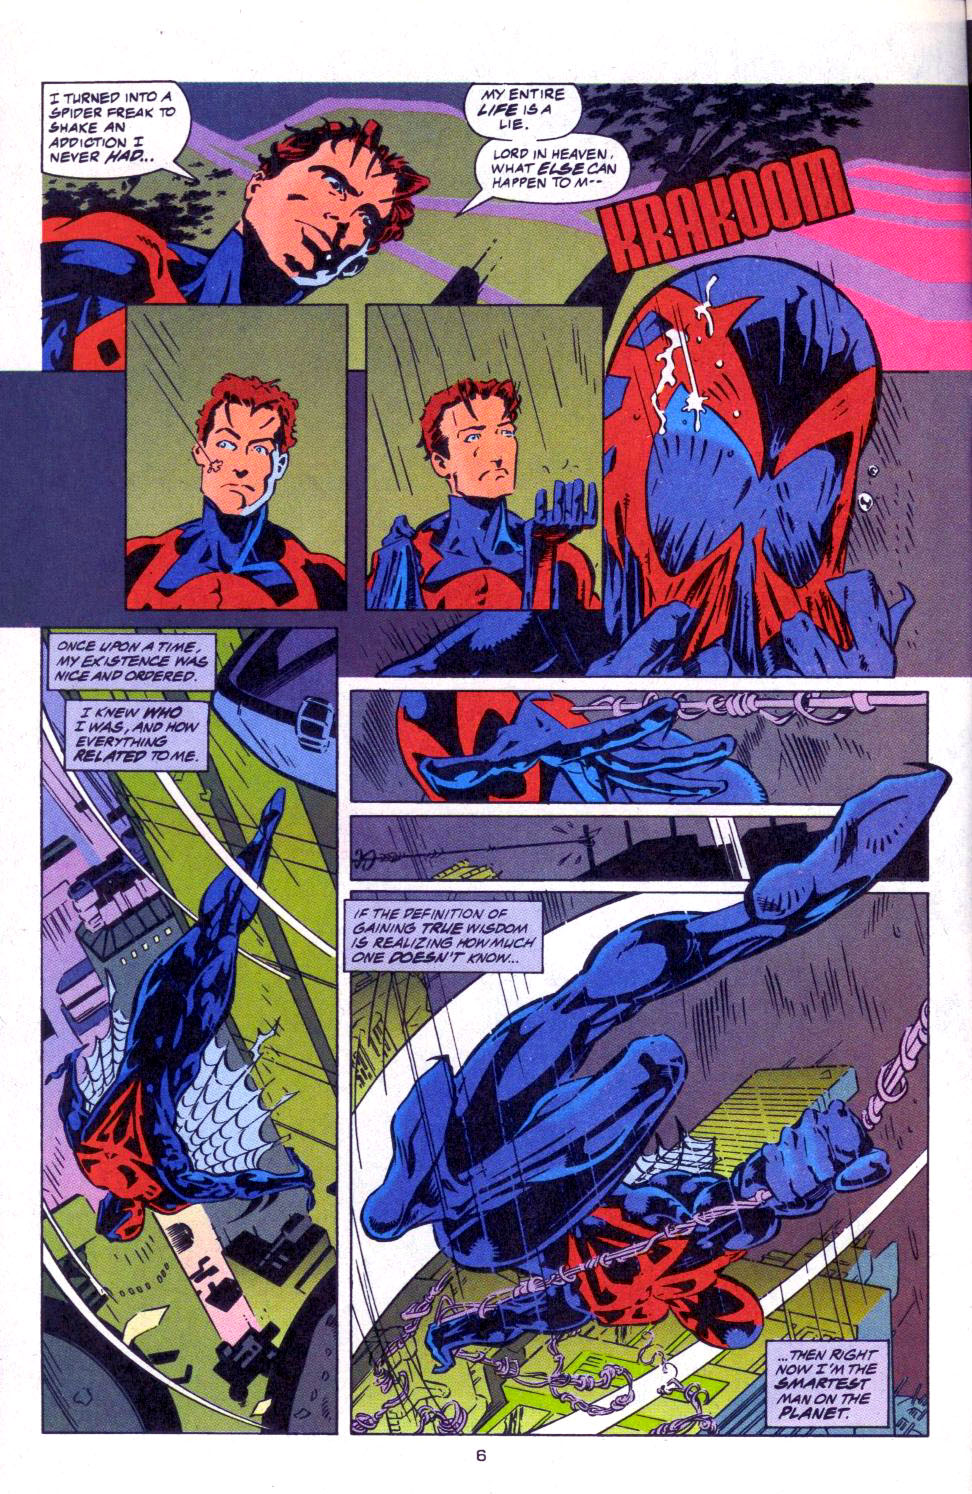 Spider-Man 2099 (1992) issue 26 - Page 6